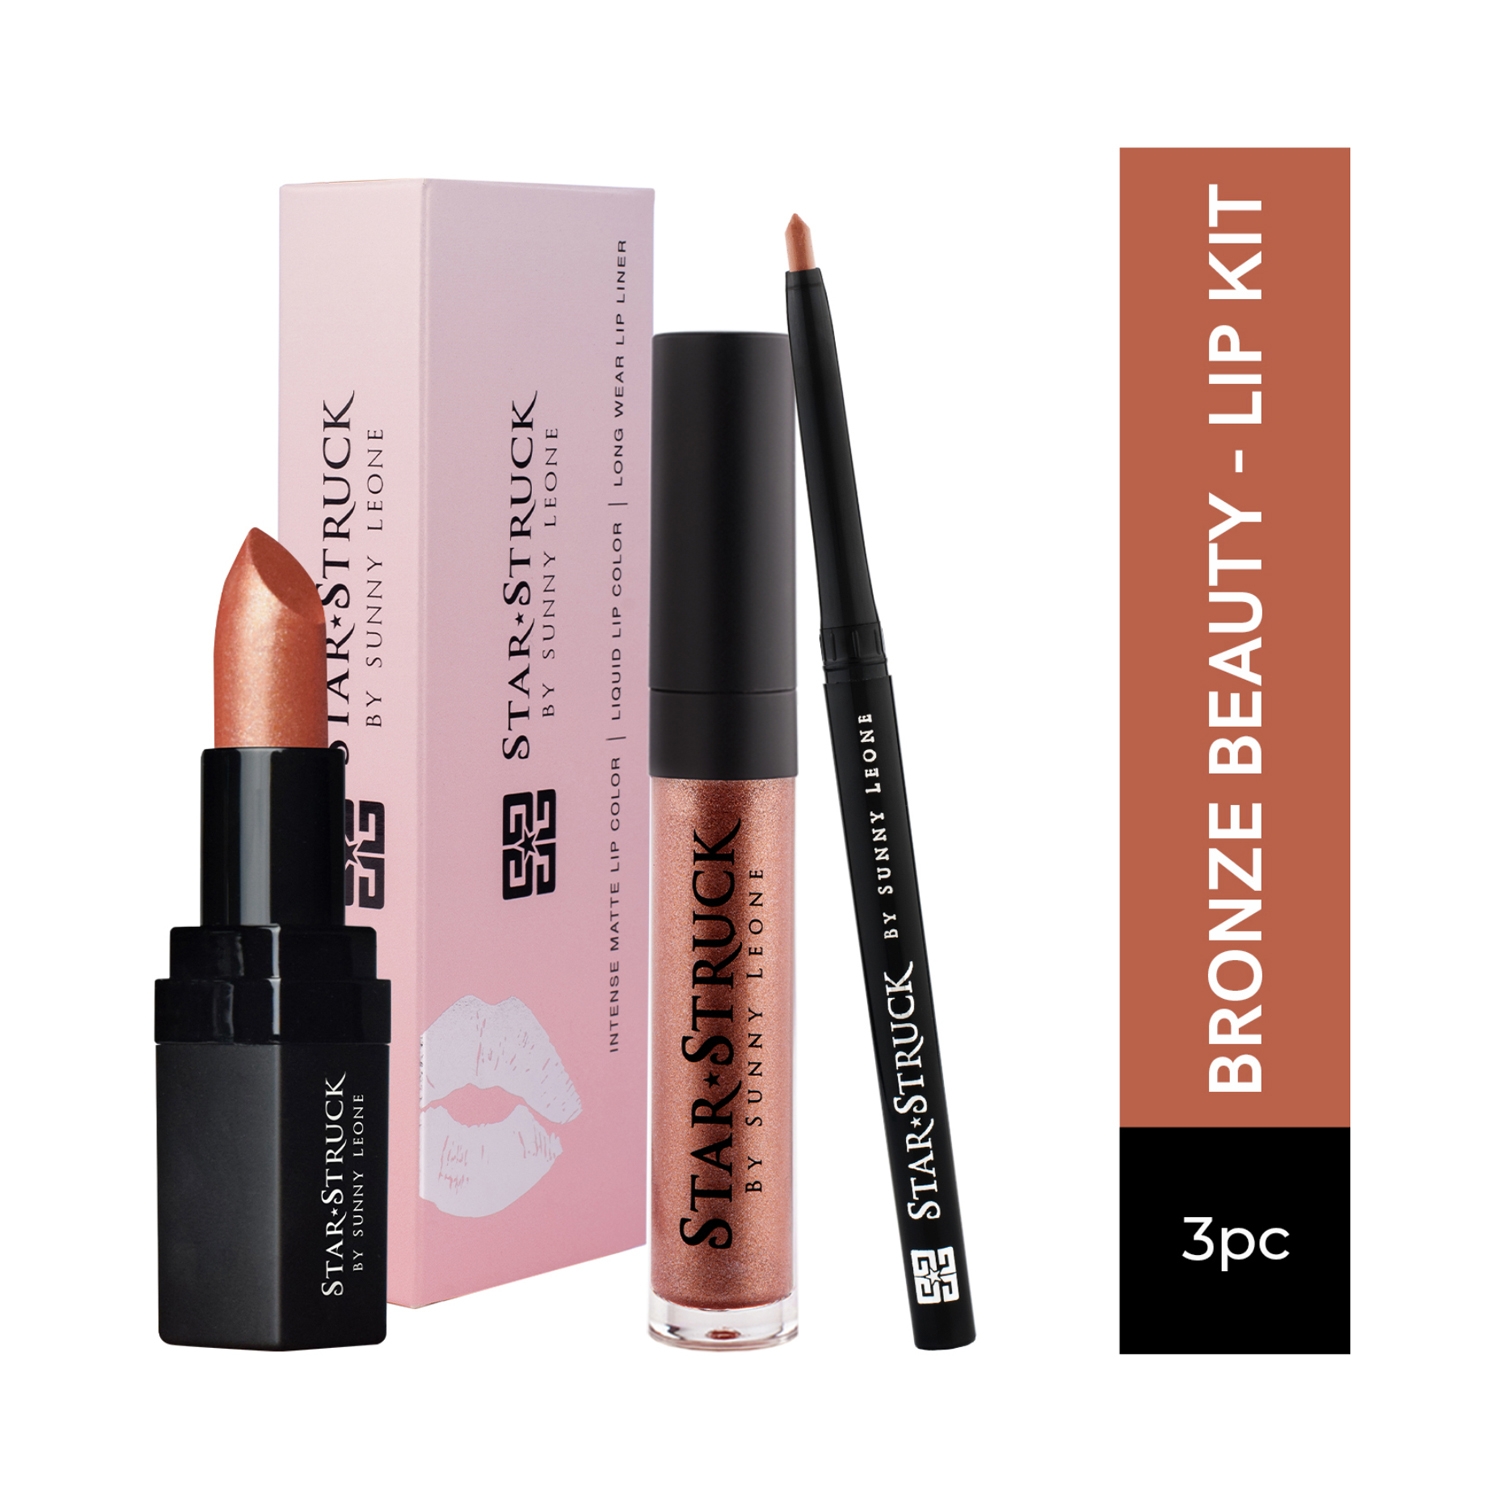 Star Struck by Sunny Leone Lip Gloss With Lip Liner & Lipstick Lip Kit - Bronze Beauty (3 Pcs)